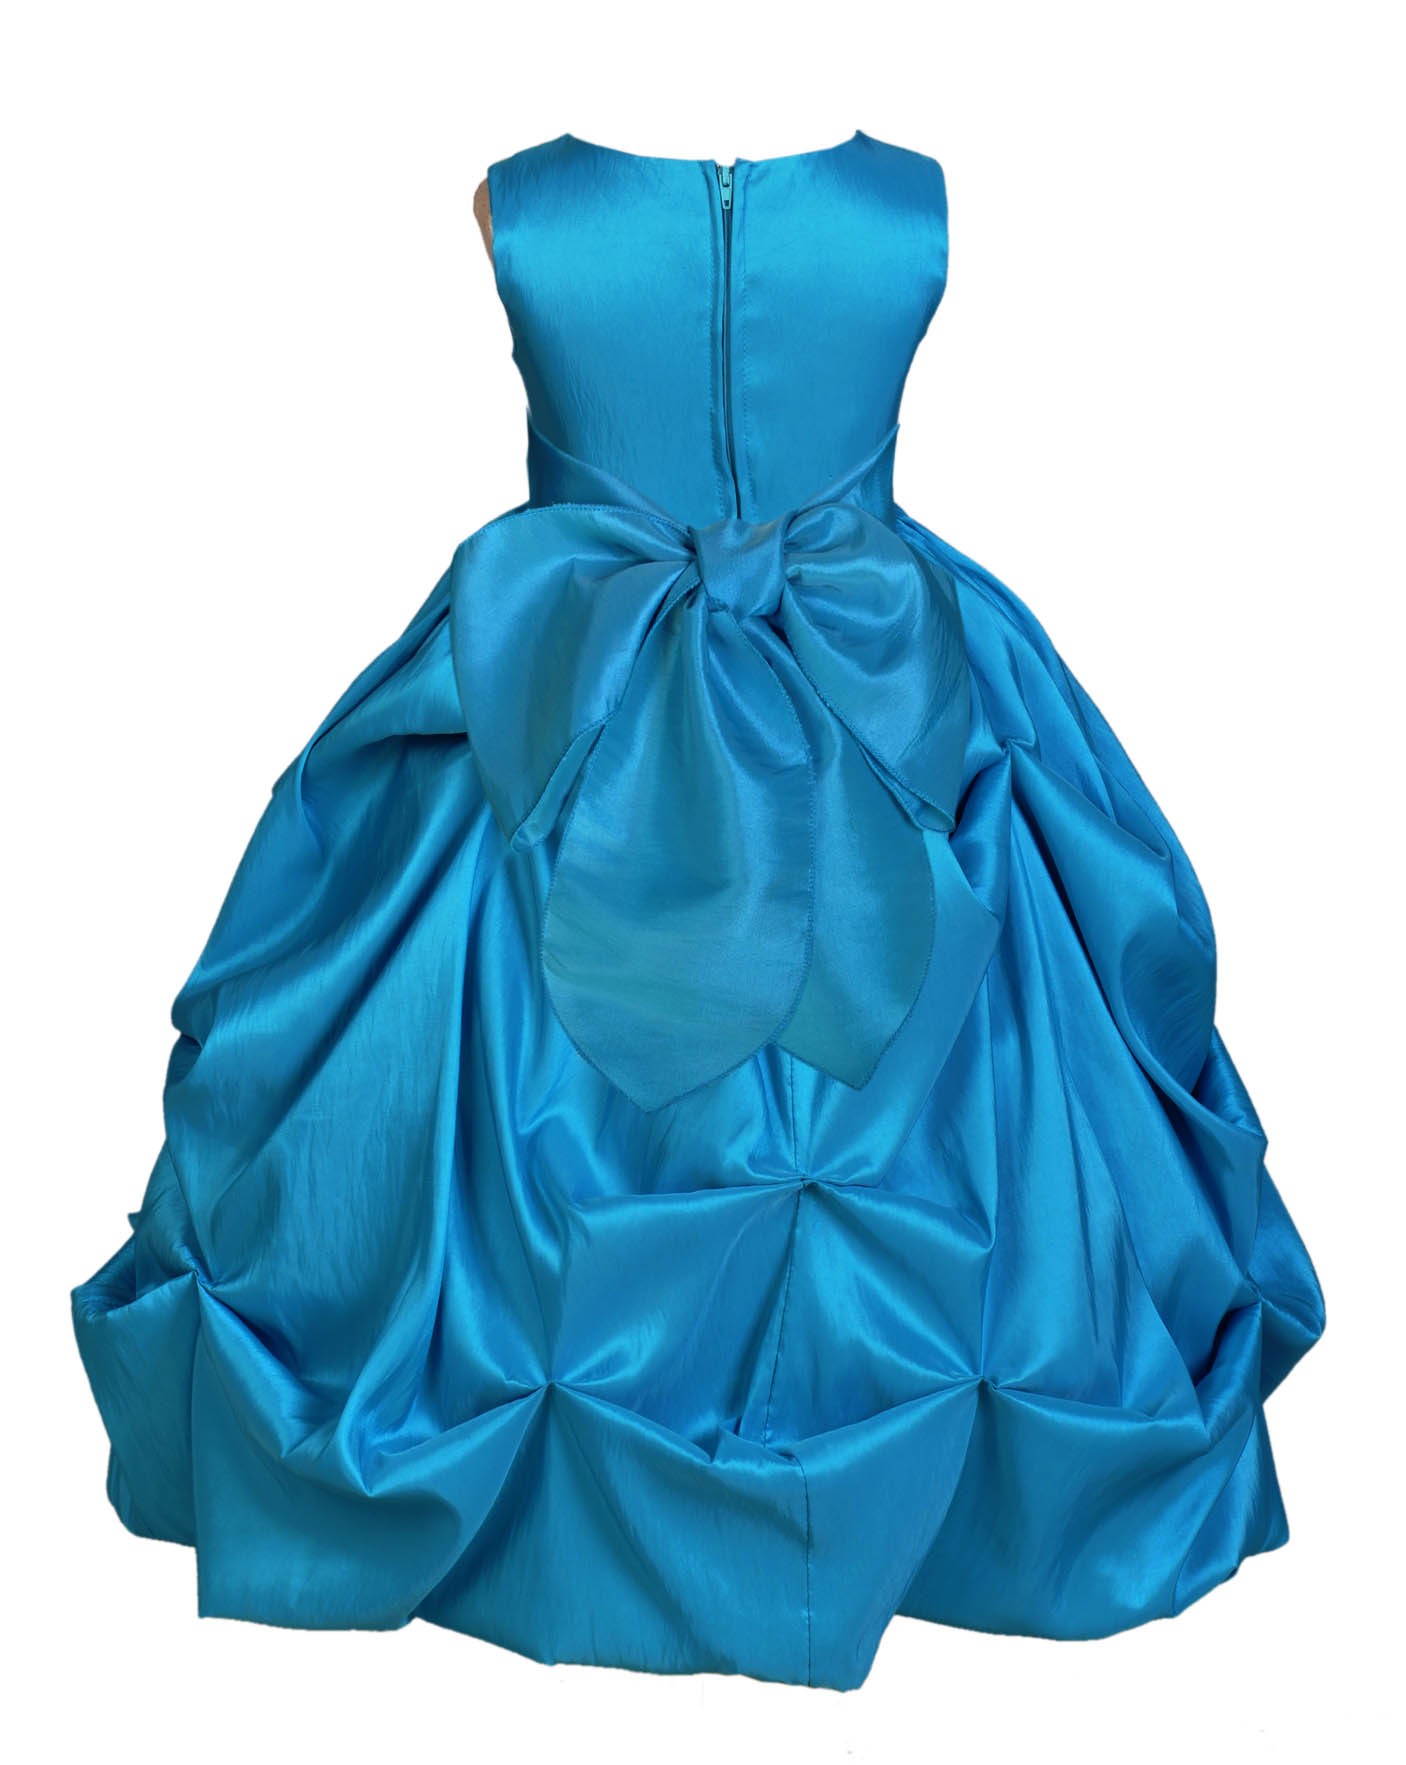 Matching Turquoise Satin Taffeta Pick-Up Bubble Flower Girl Dress 301S